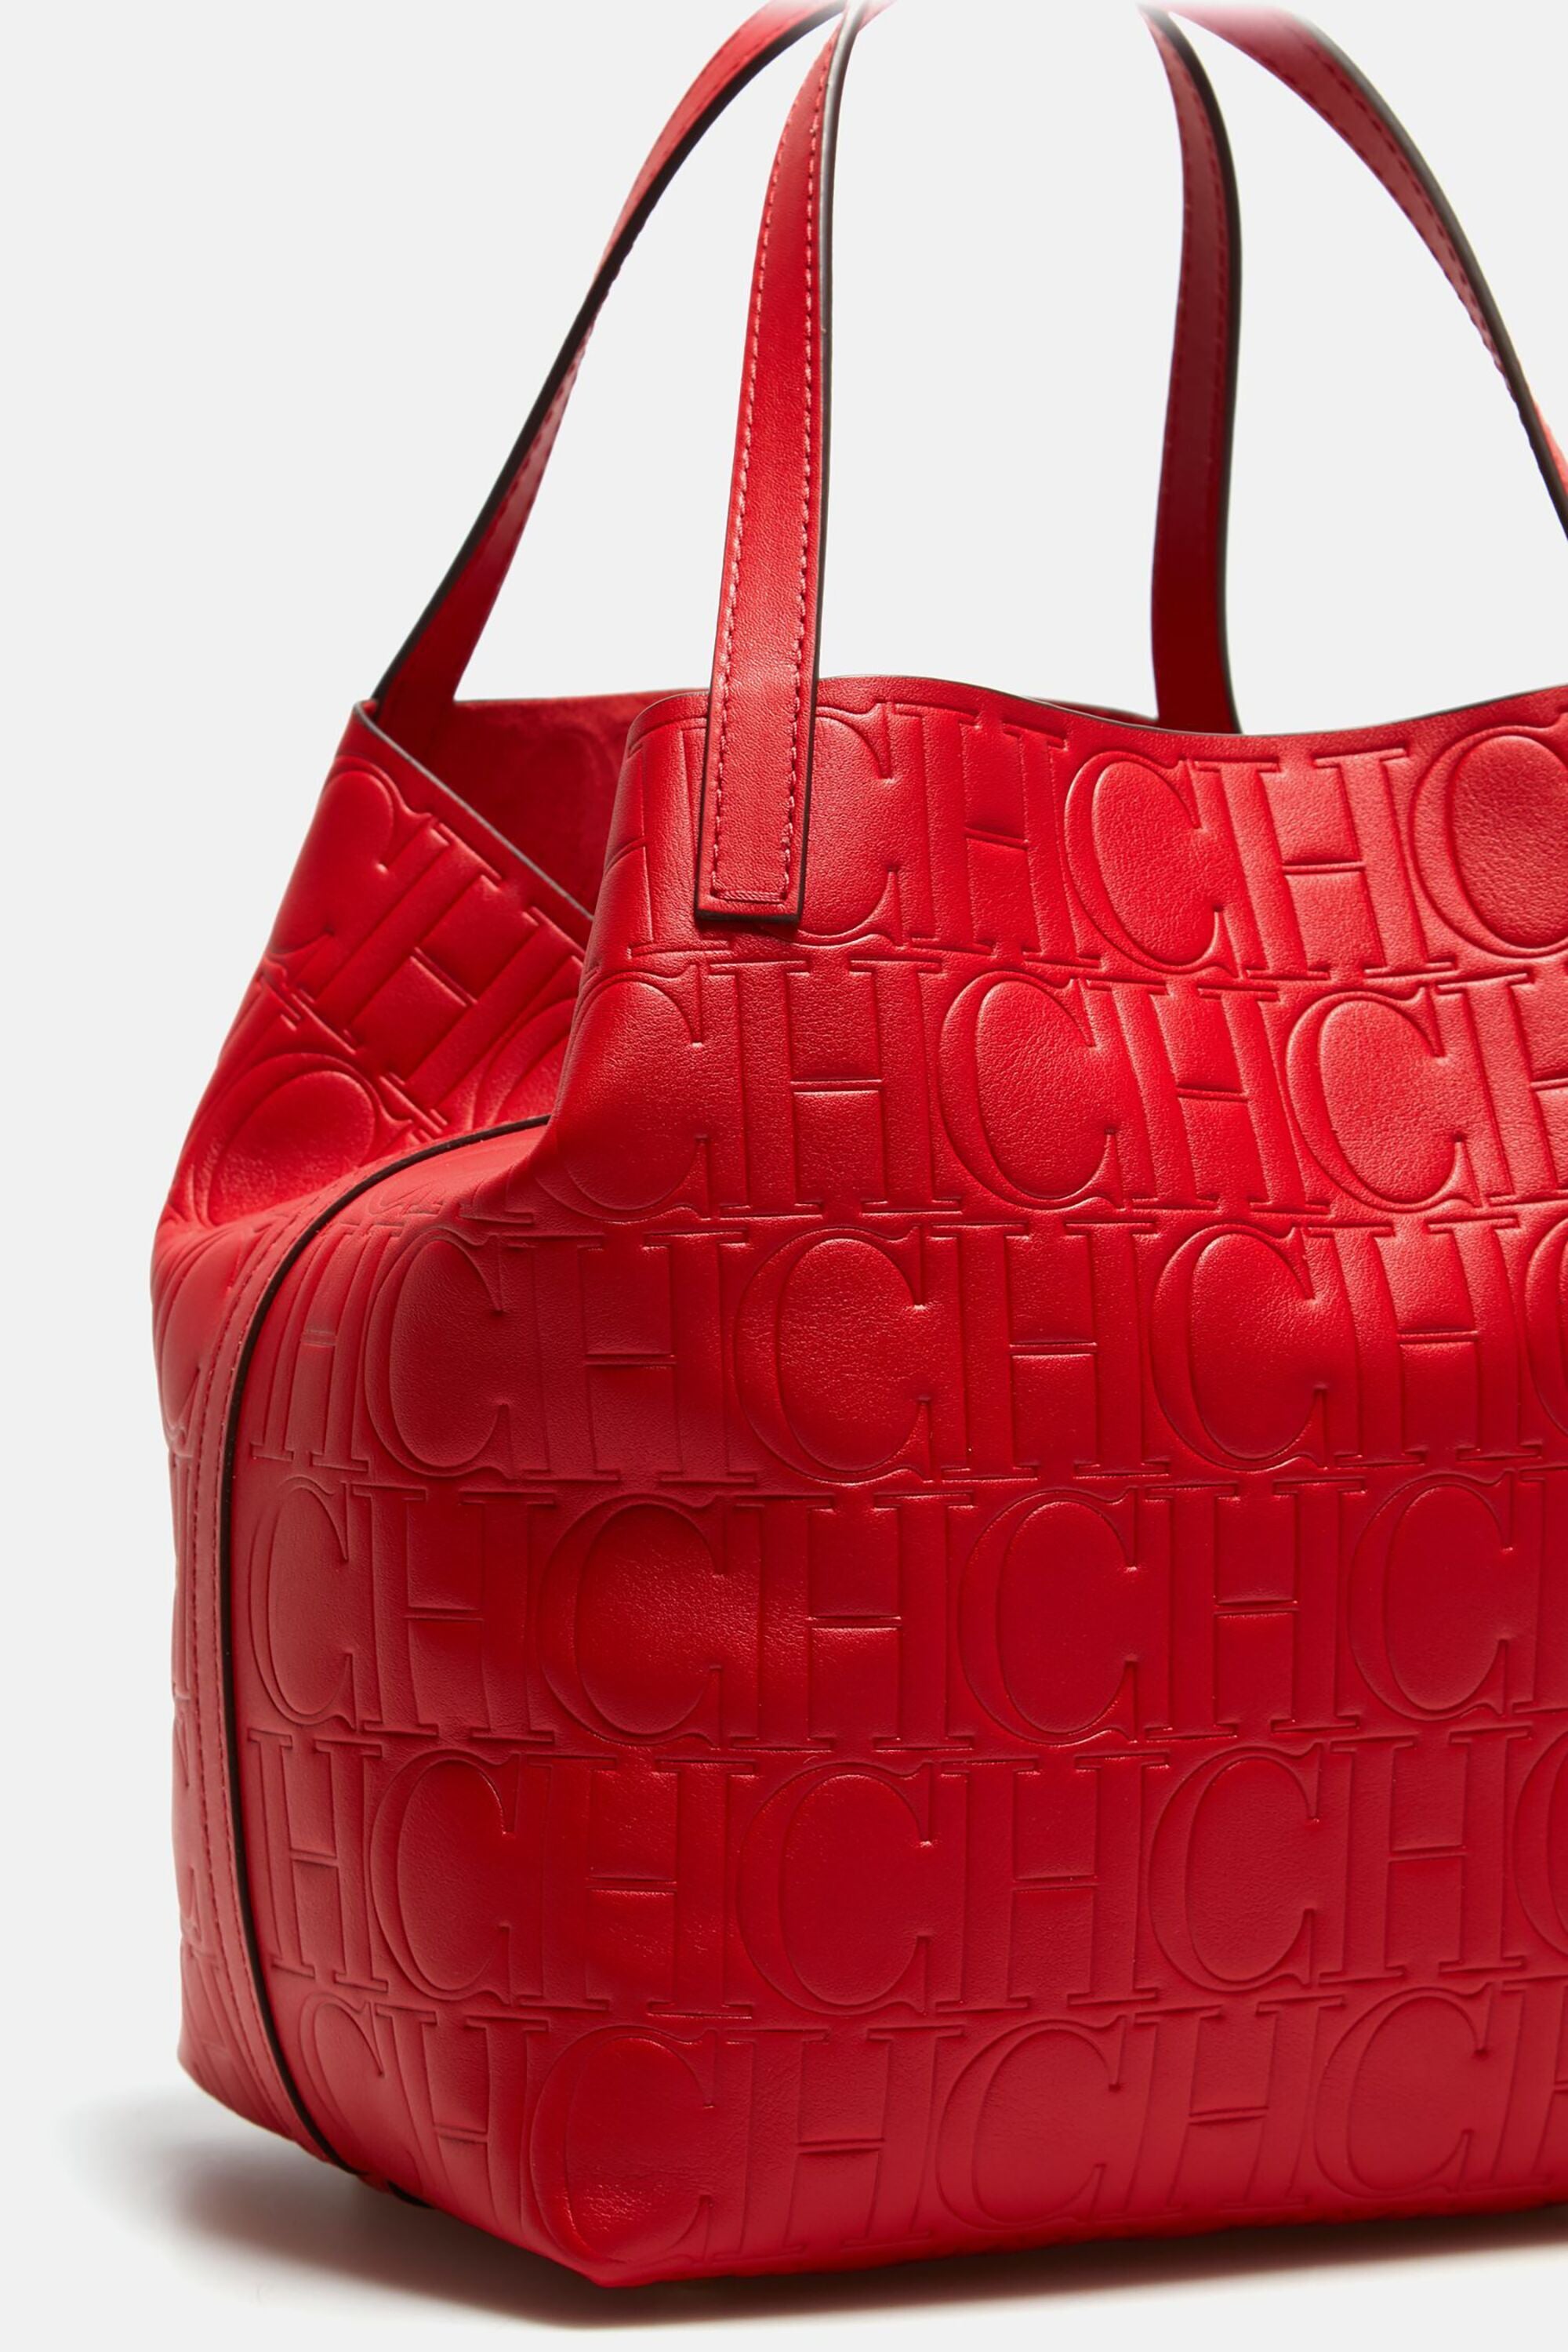 Carolina Herrera Red Leather MATRYOSHKA CH Handbag